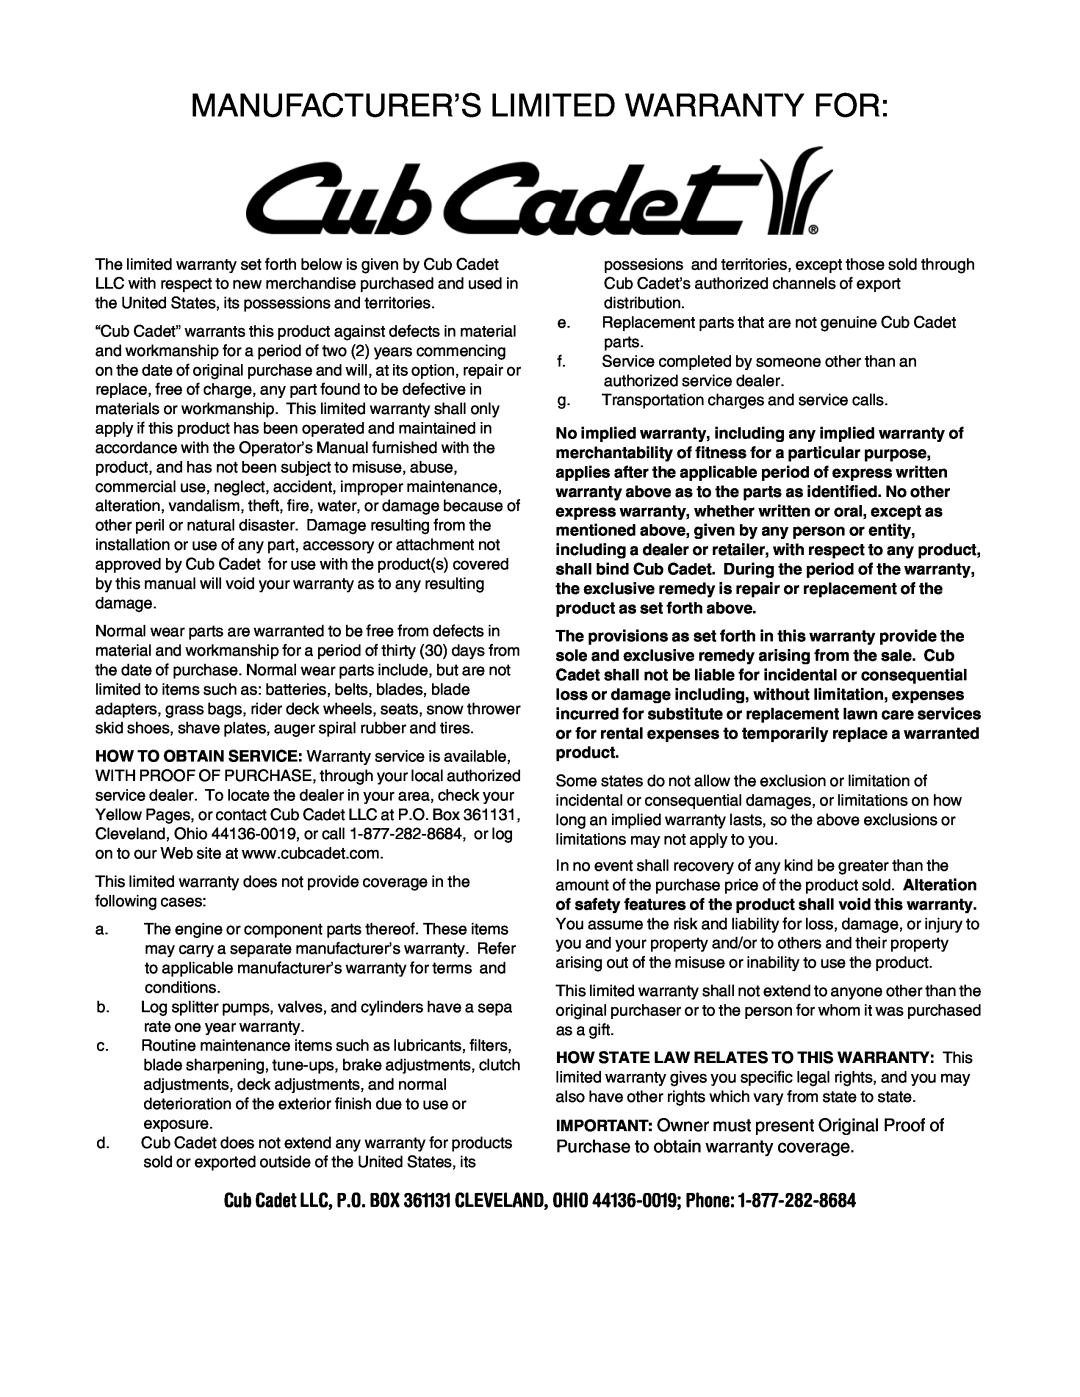 Cub Cadet 190-192-190 Manufacturer’S Limited Warranty For, Cub Cadet LLC, P.O. BOX 361131 CLEVELAND, OHIO 44136-0019 Phone 